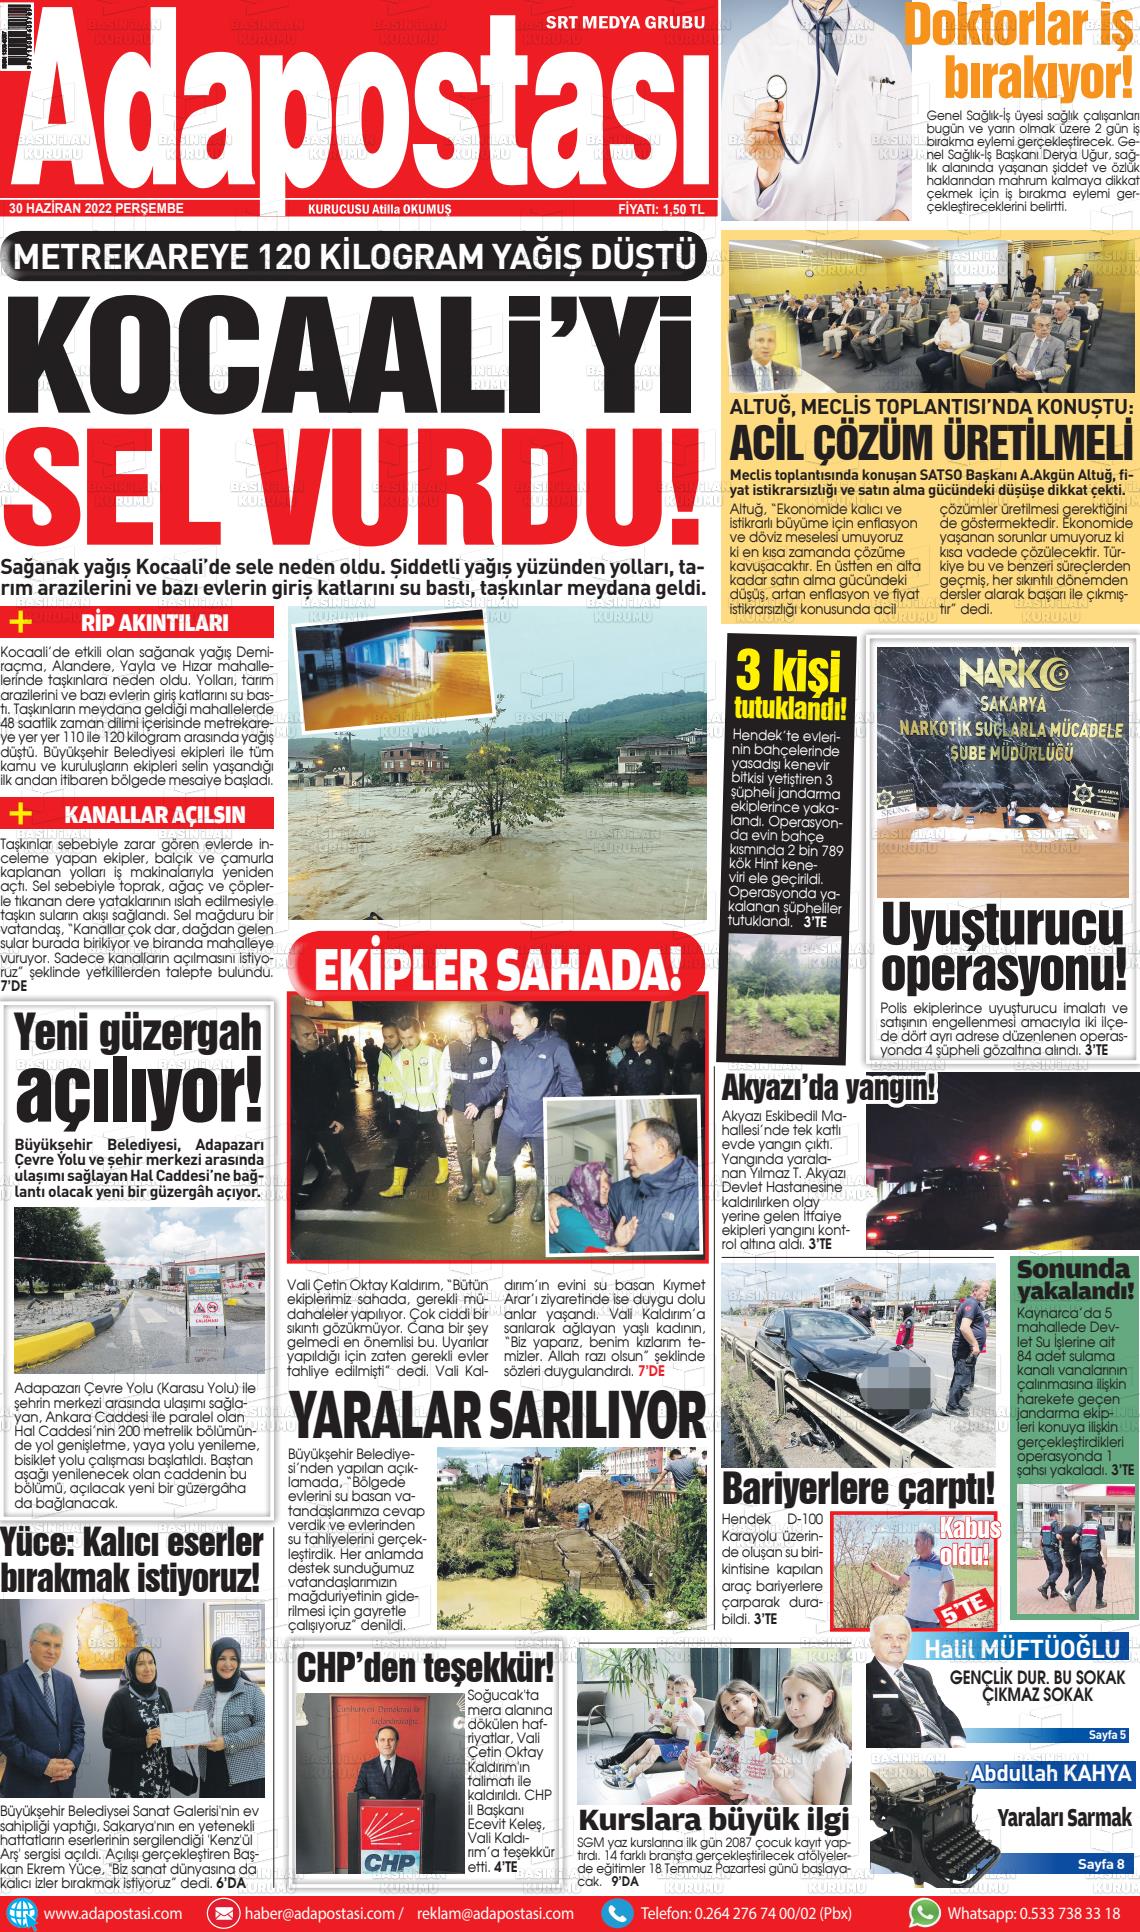 30 Haziran 2022 Ada Postası Gazete Manşeti